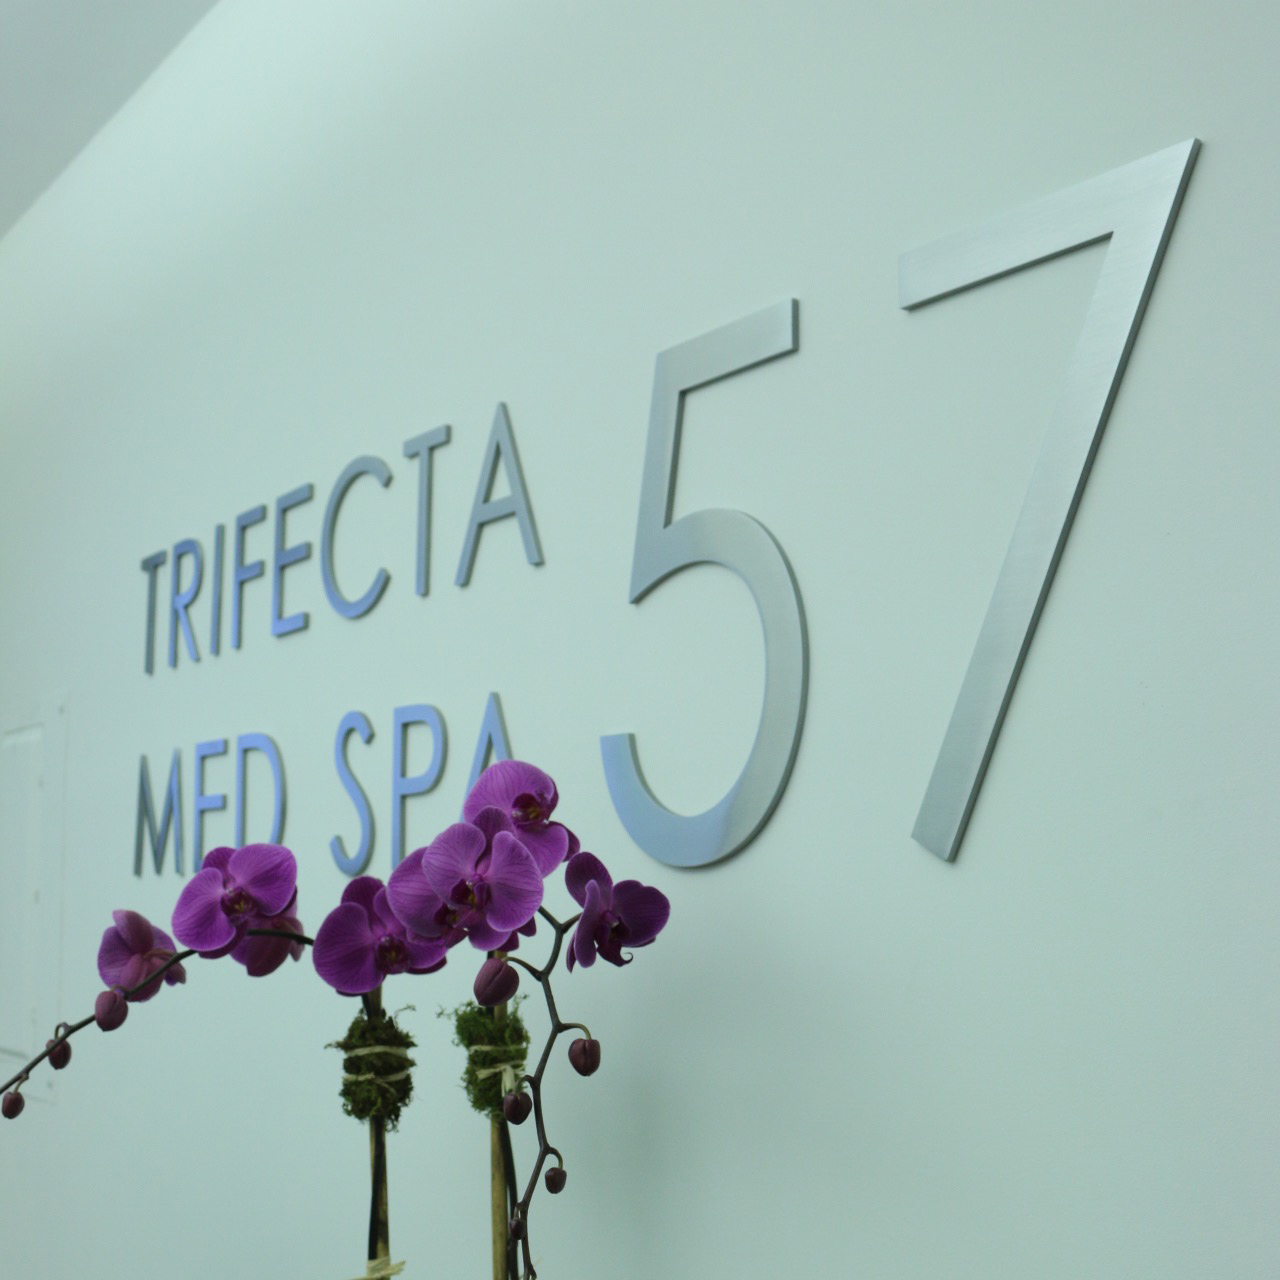 Trifecta 57 Med Spa